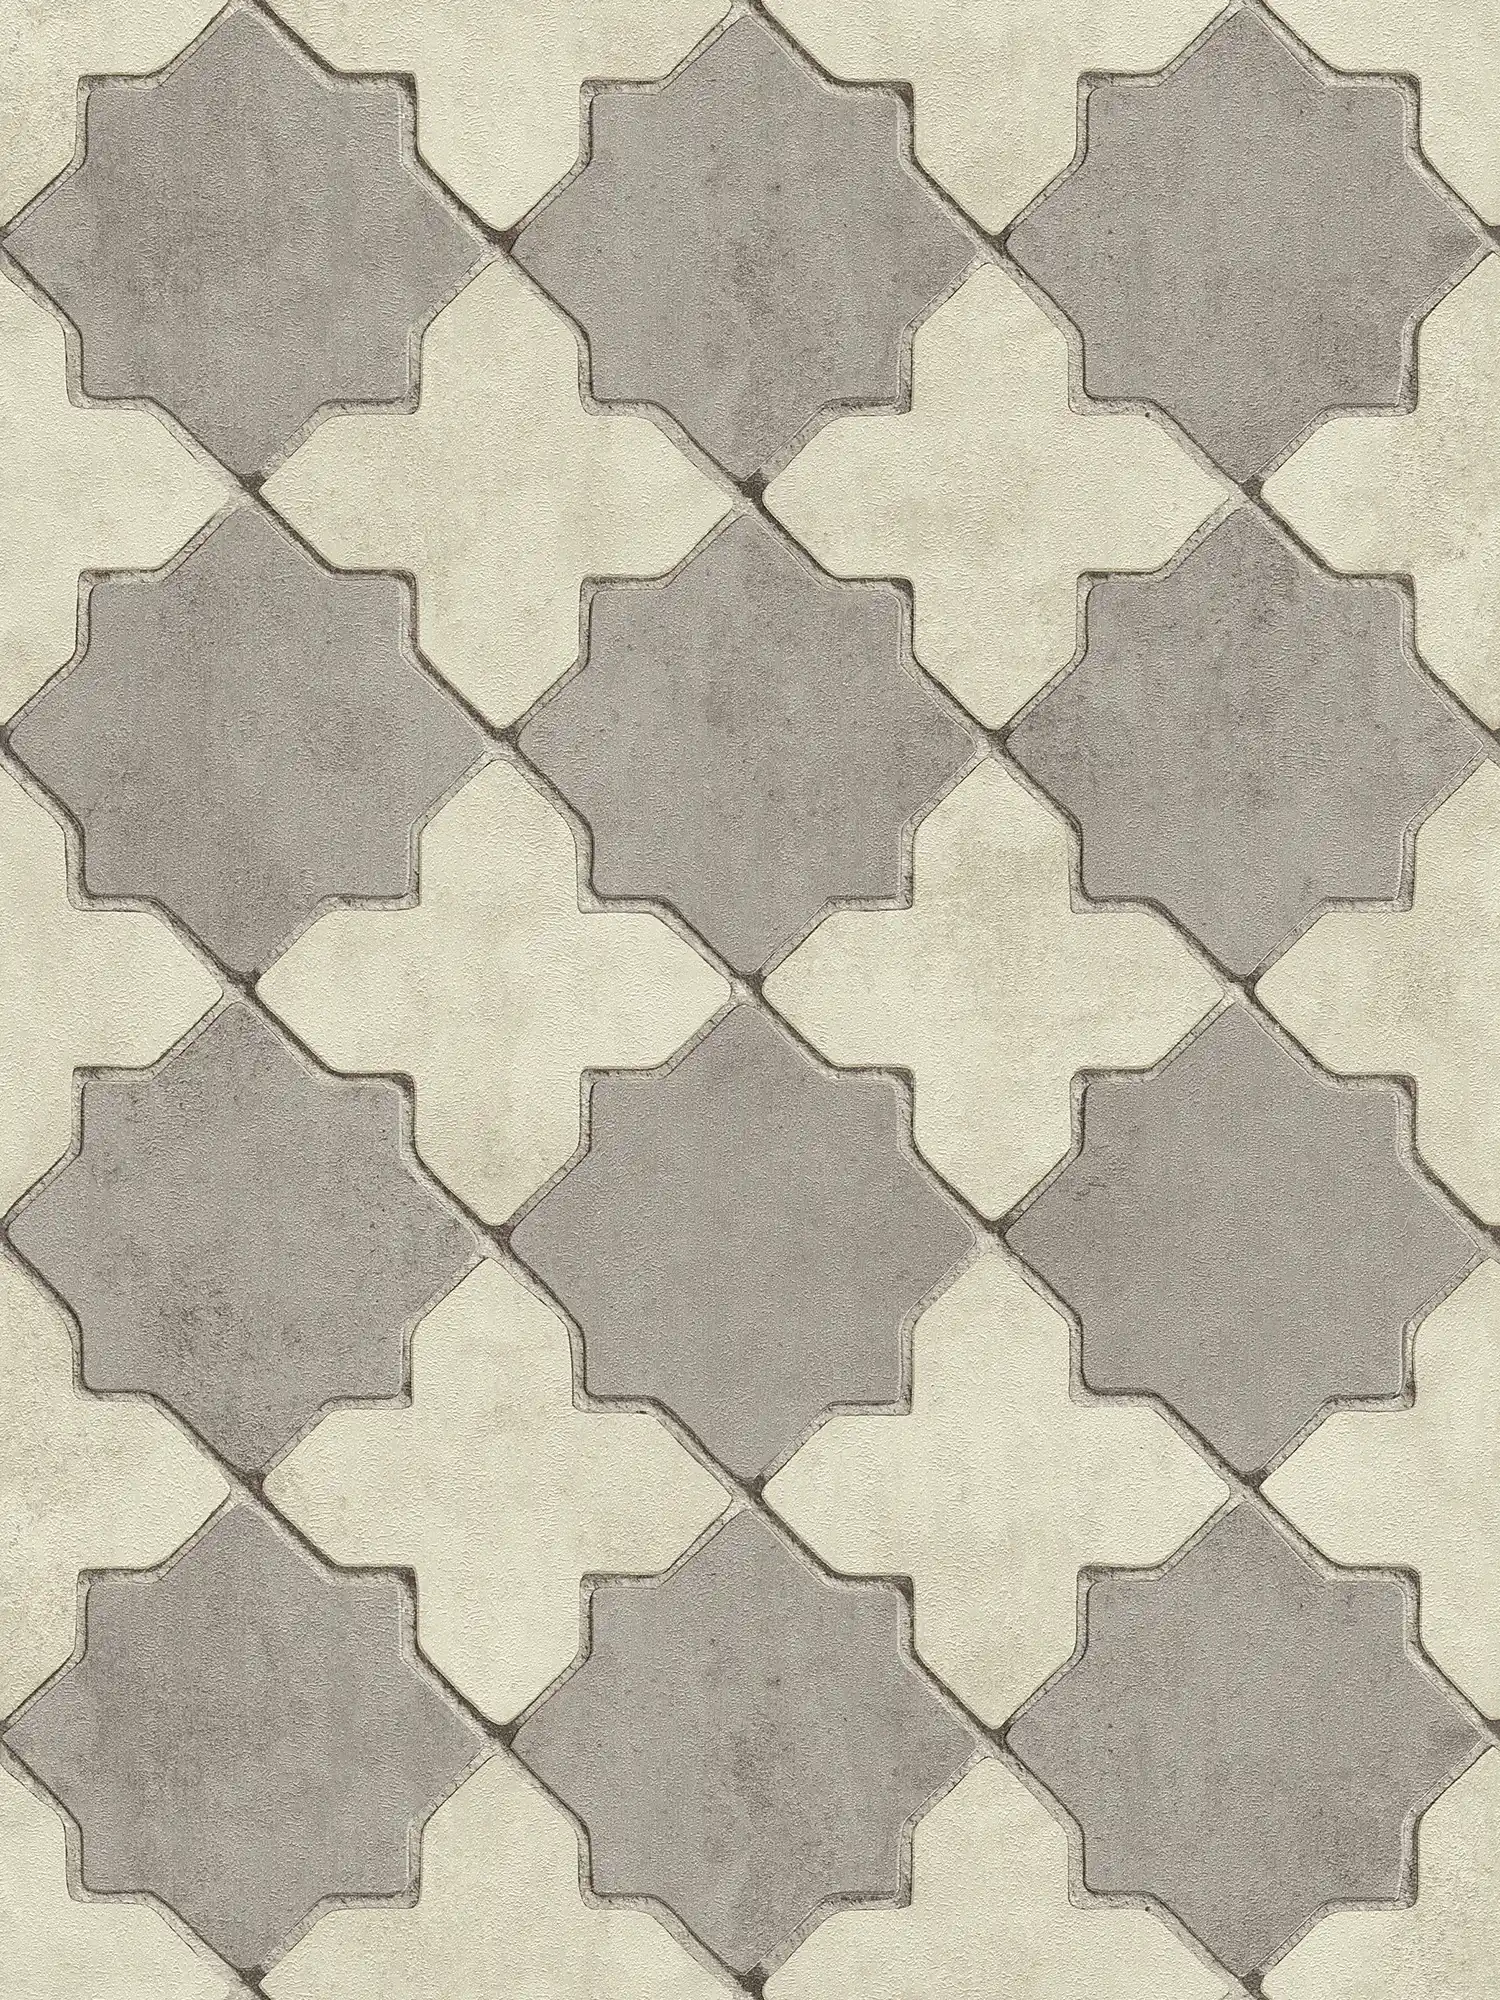 Tile wallpaper mosaic look - grey, cream
